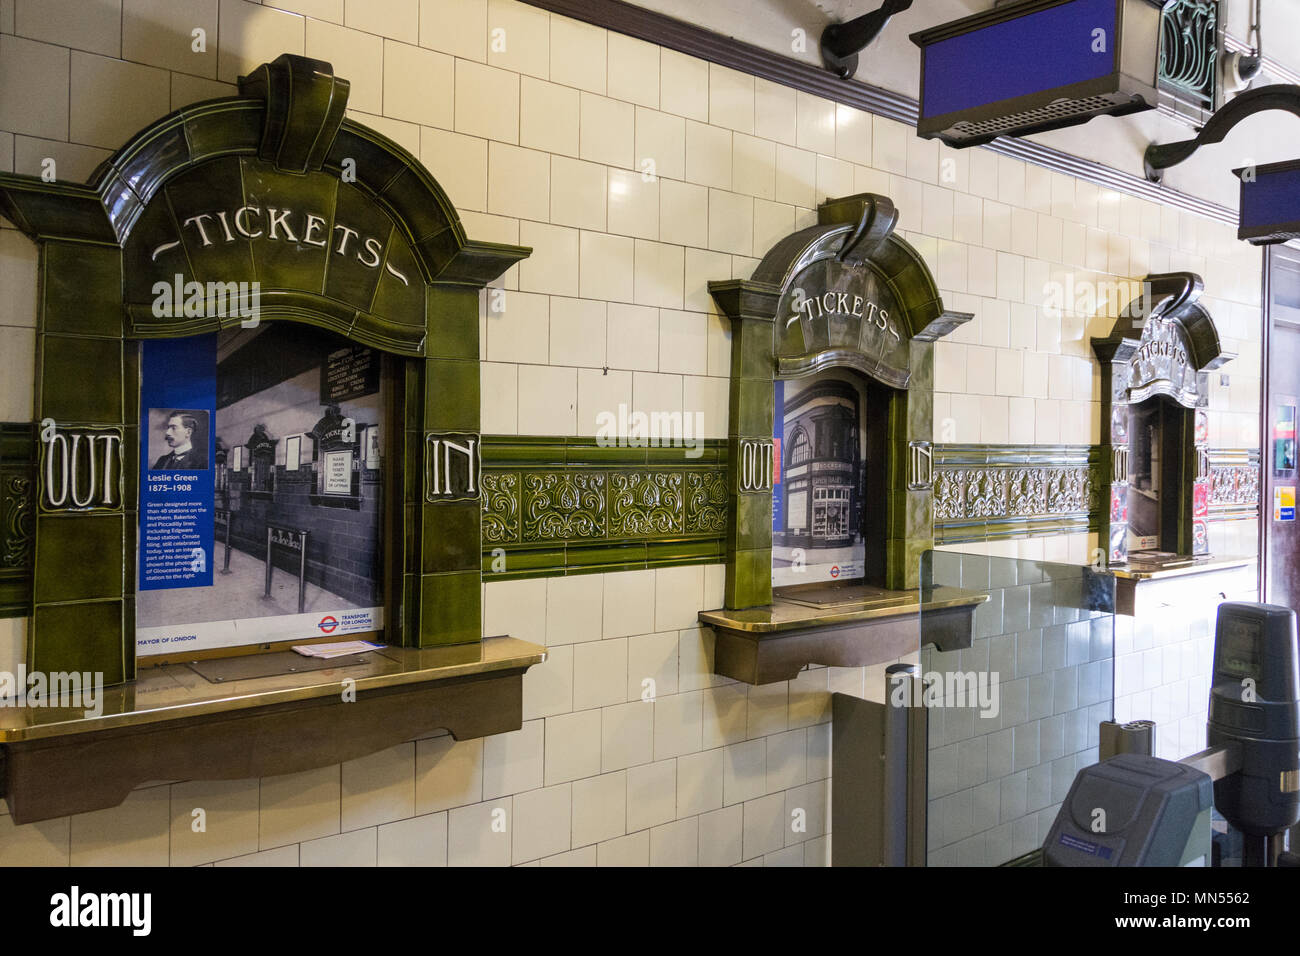 Original Leslie Green ticket booths inside Edgware Road station, Chapel Street, Marylebone, London NW1, UK Stock Photo